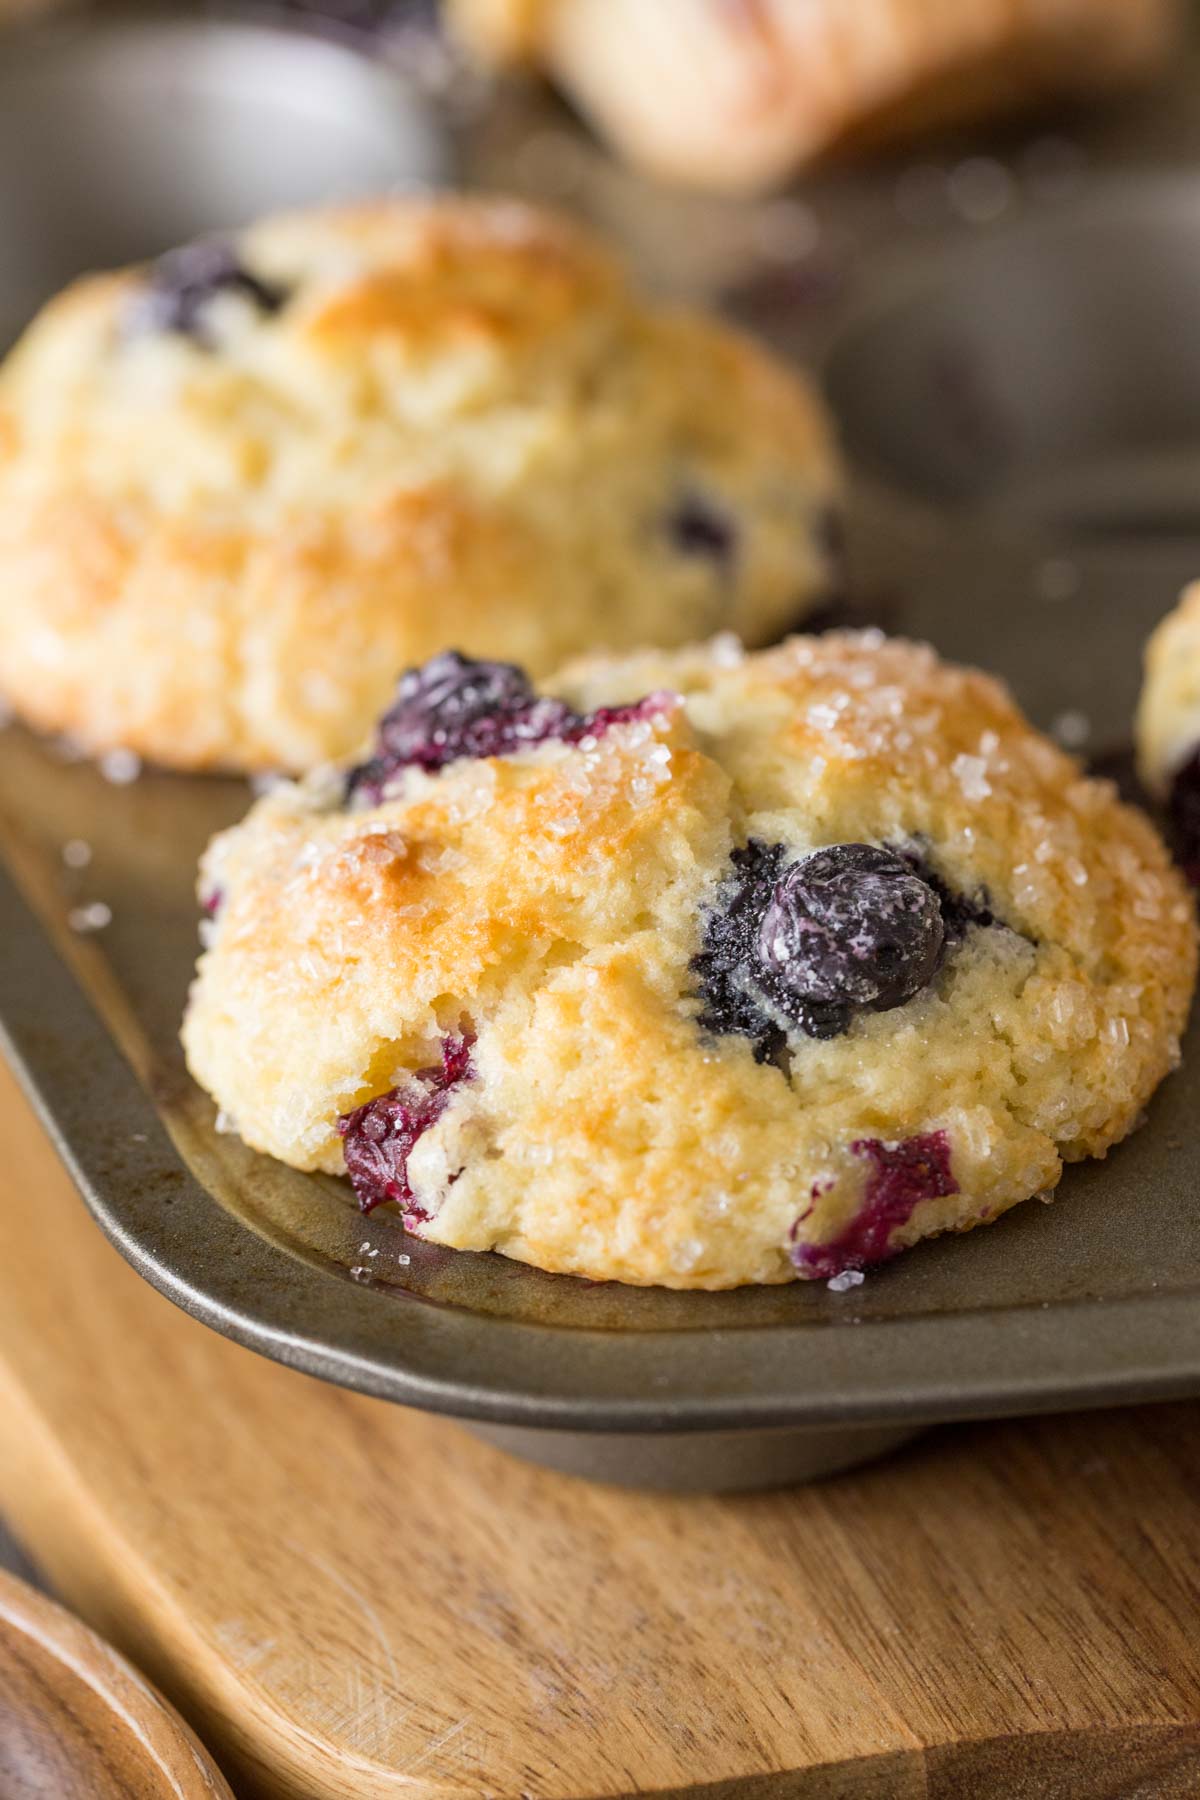 Best Ever Buttermilk Blueberry Muffins Lovely Little Kitchen